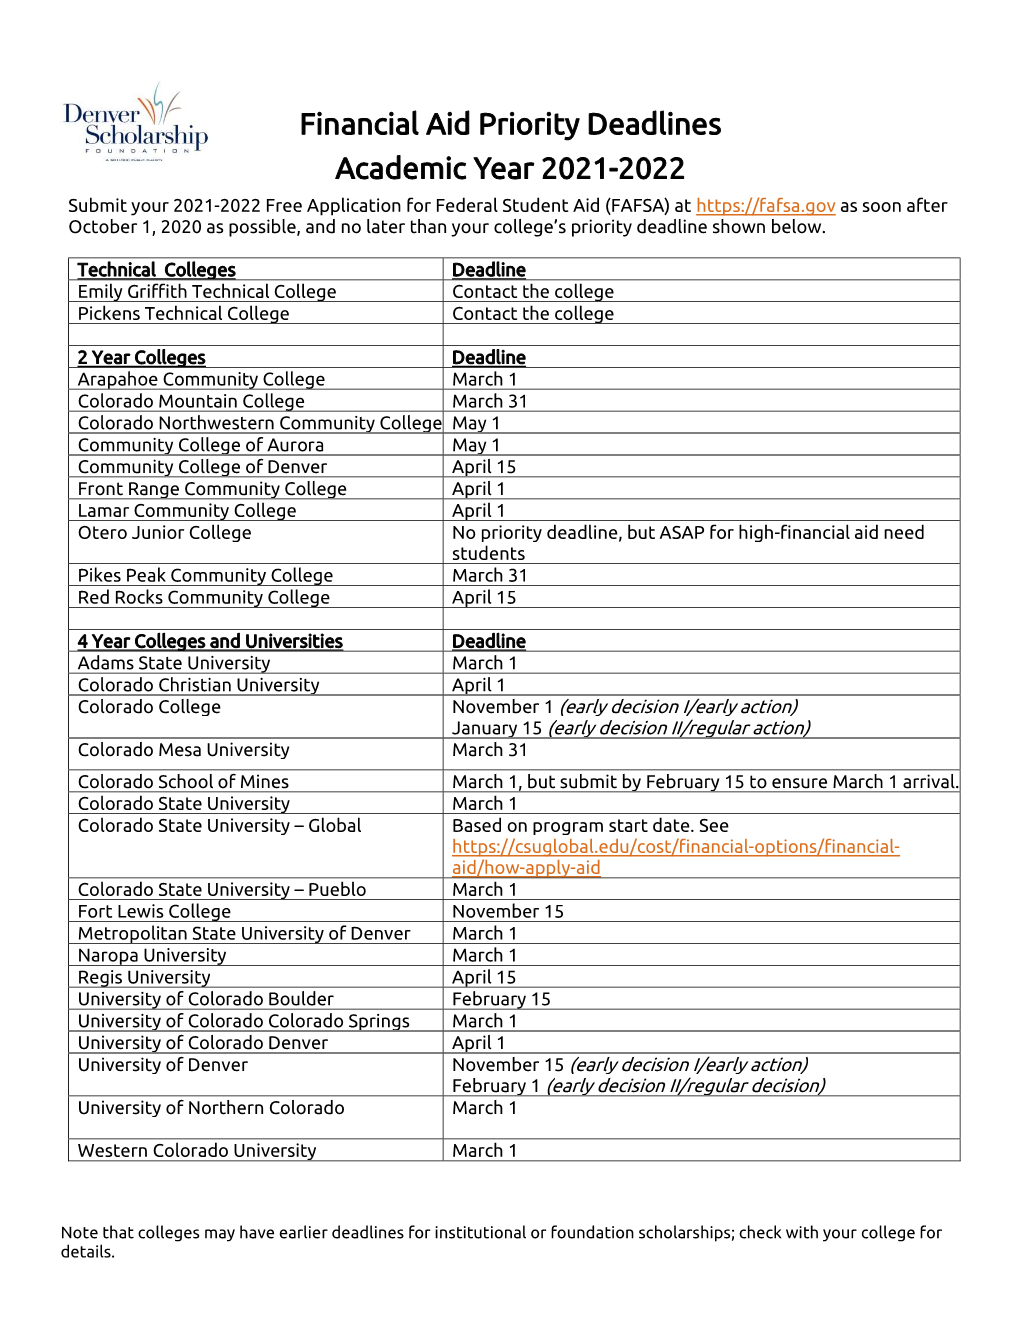 Financial Aid Priority Deadlines Academic Year 2021-2022